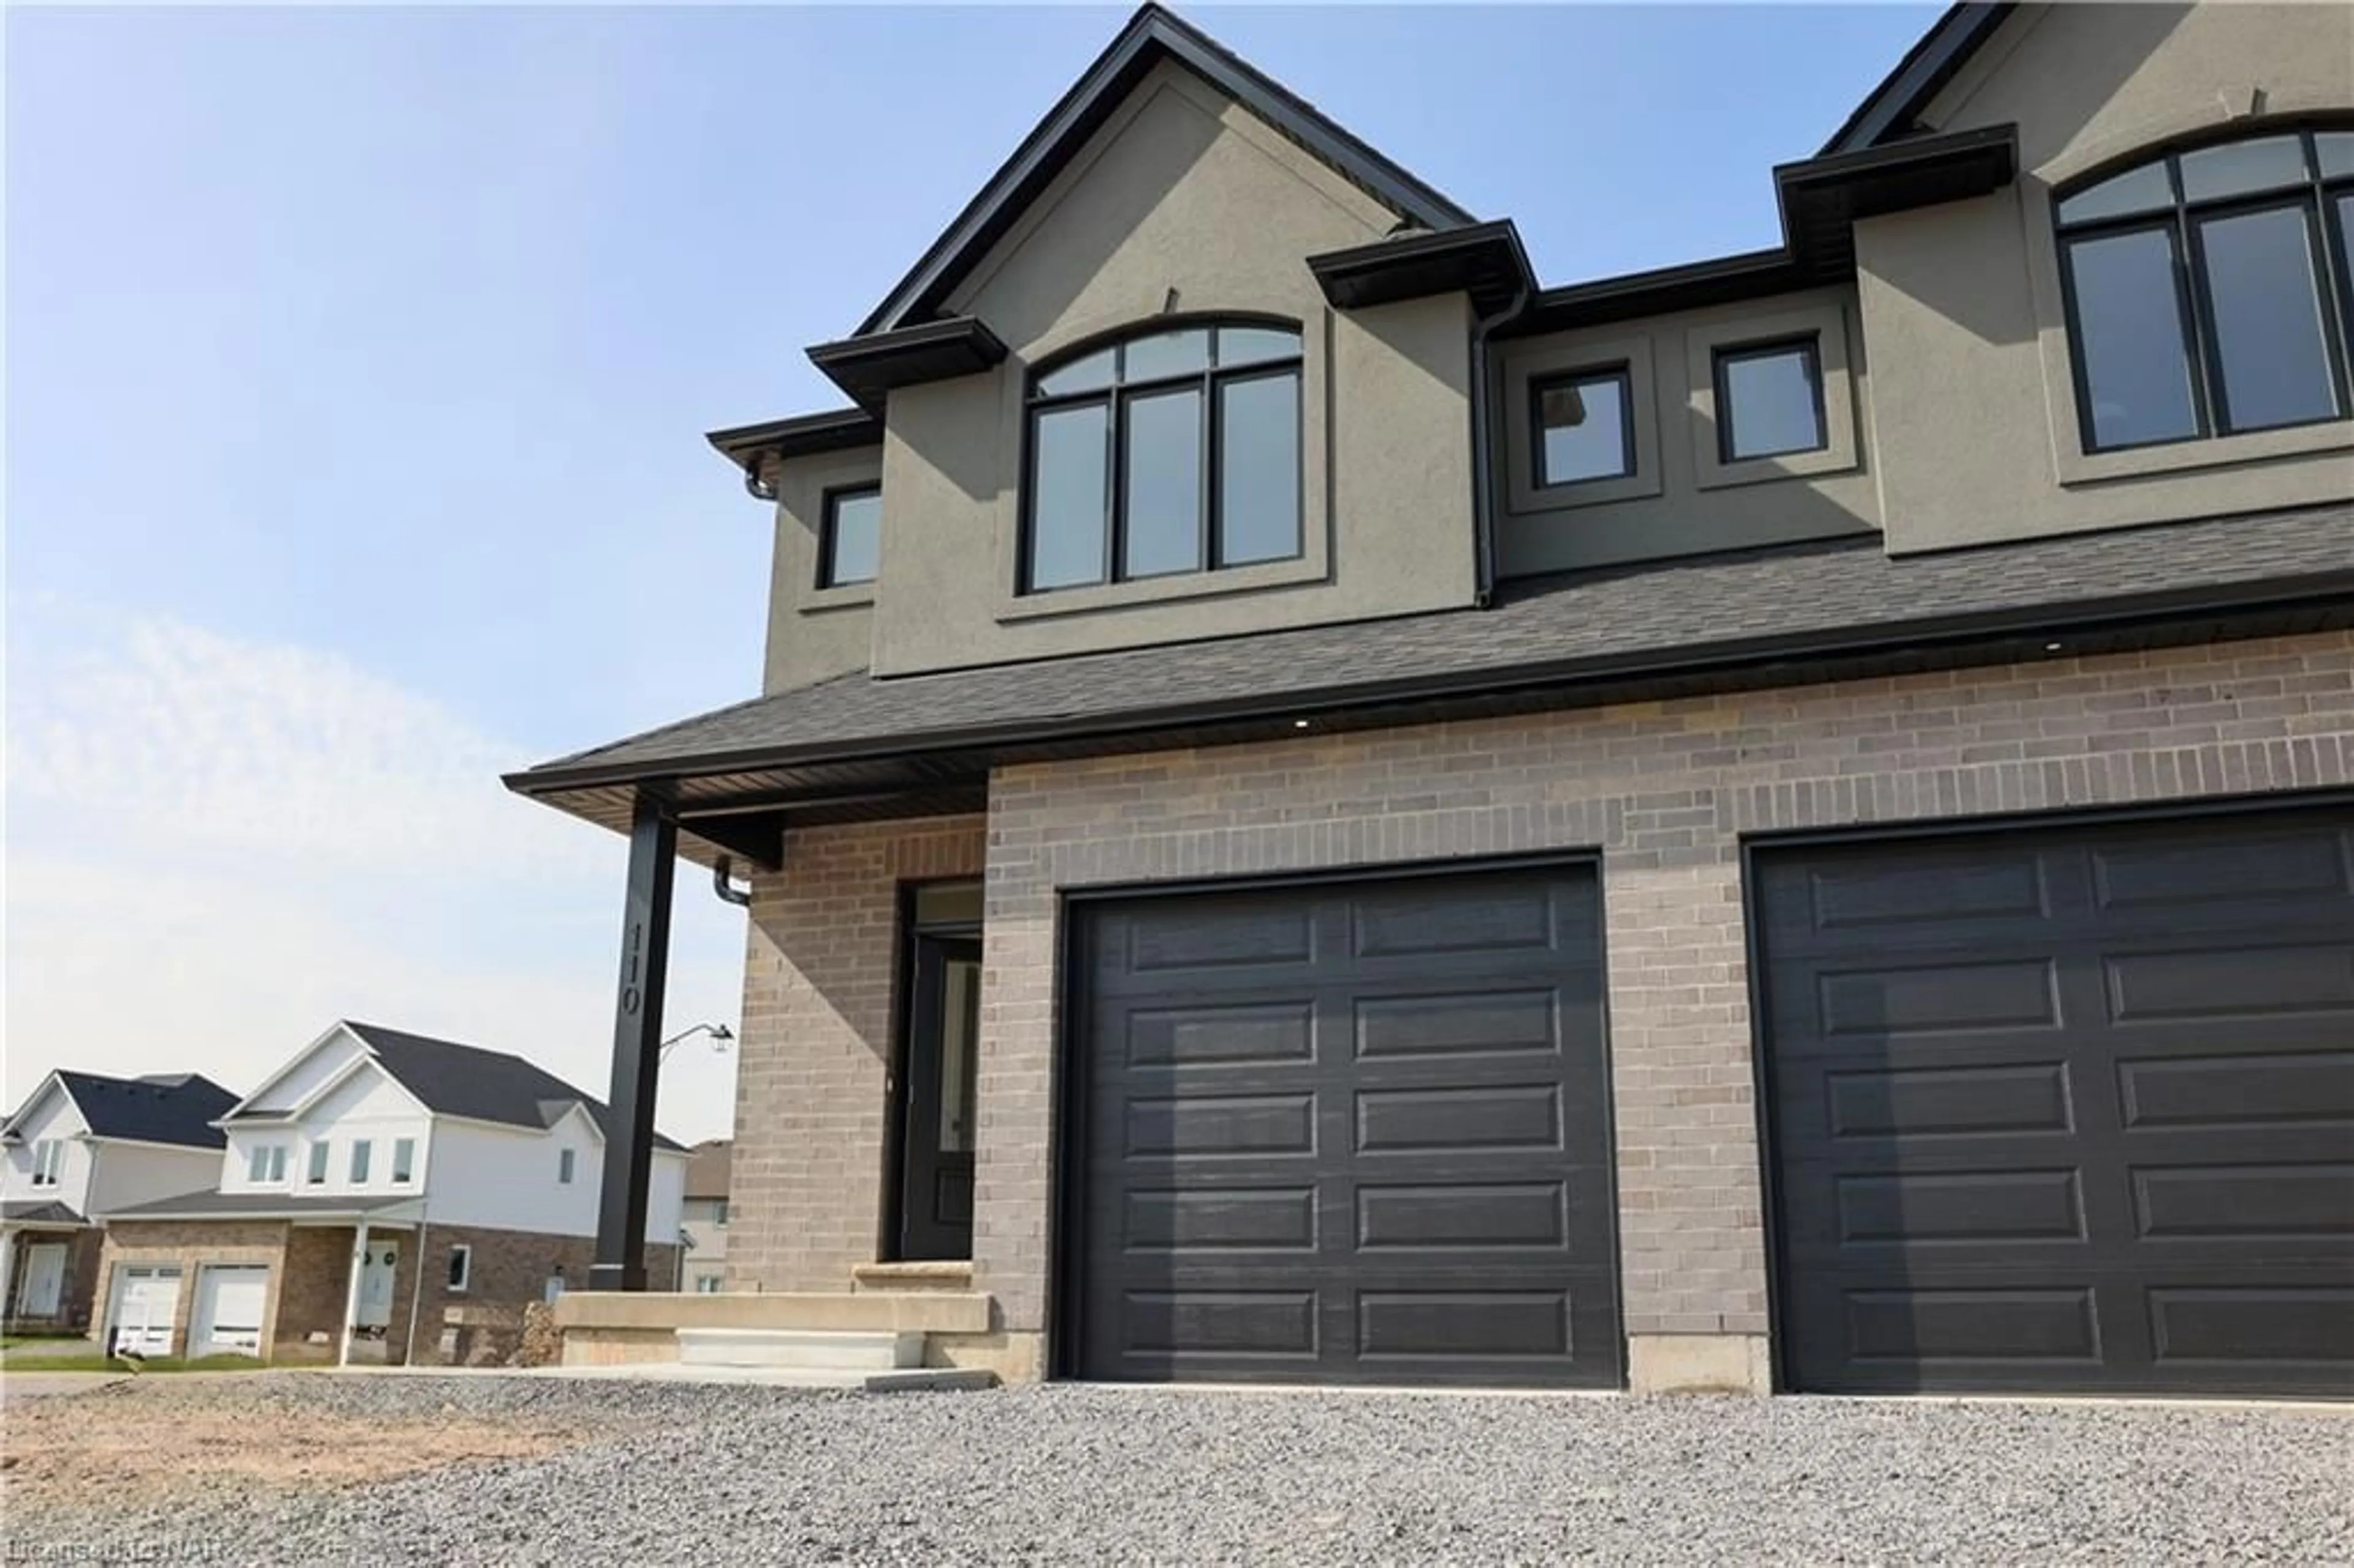 Home with brick exterior material for 110 Elvira Way, Thorold Ontario L2V 0B7